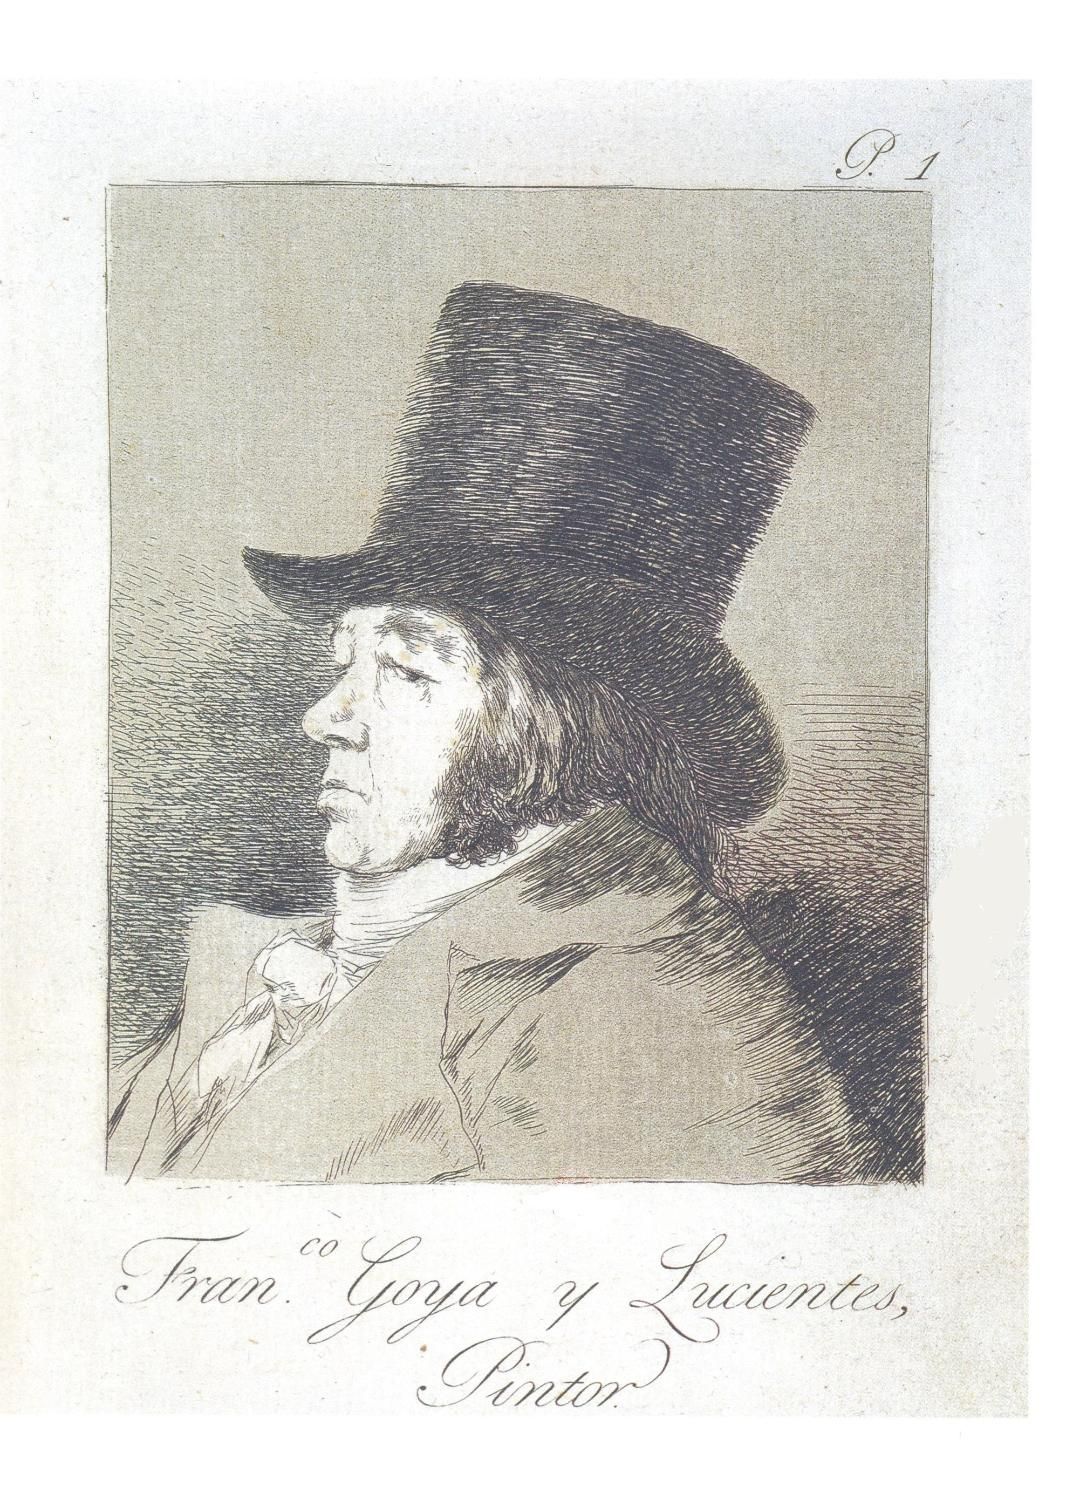 Francisco GOYA Francisco Goya y Lucientes

 Autoportrait, 1799

 

 Gravure orig&hellip;